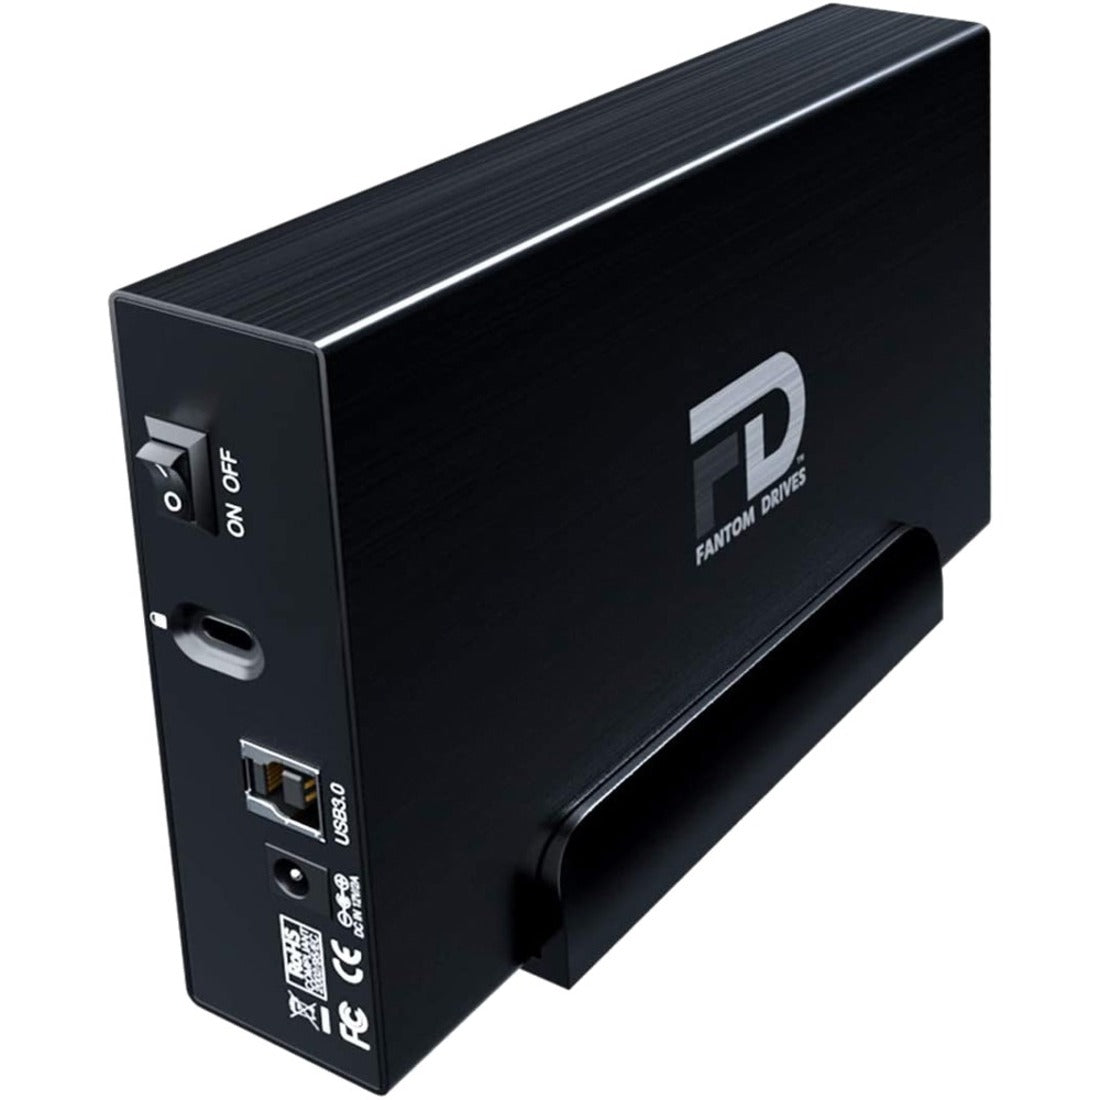 Fantom Drives GF3B14000UP GFORCE 14TB External Hard Drive - USB 3.2 Gen 1 5Gb/s - Black, High-Speed Storage Solution